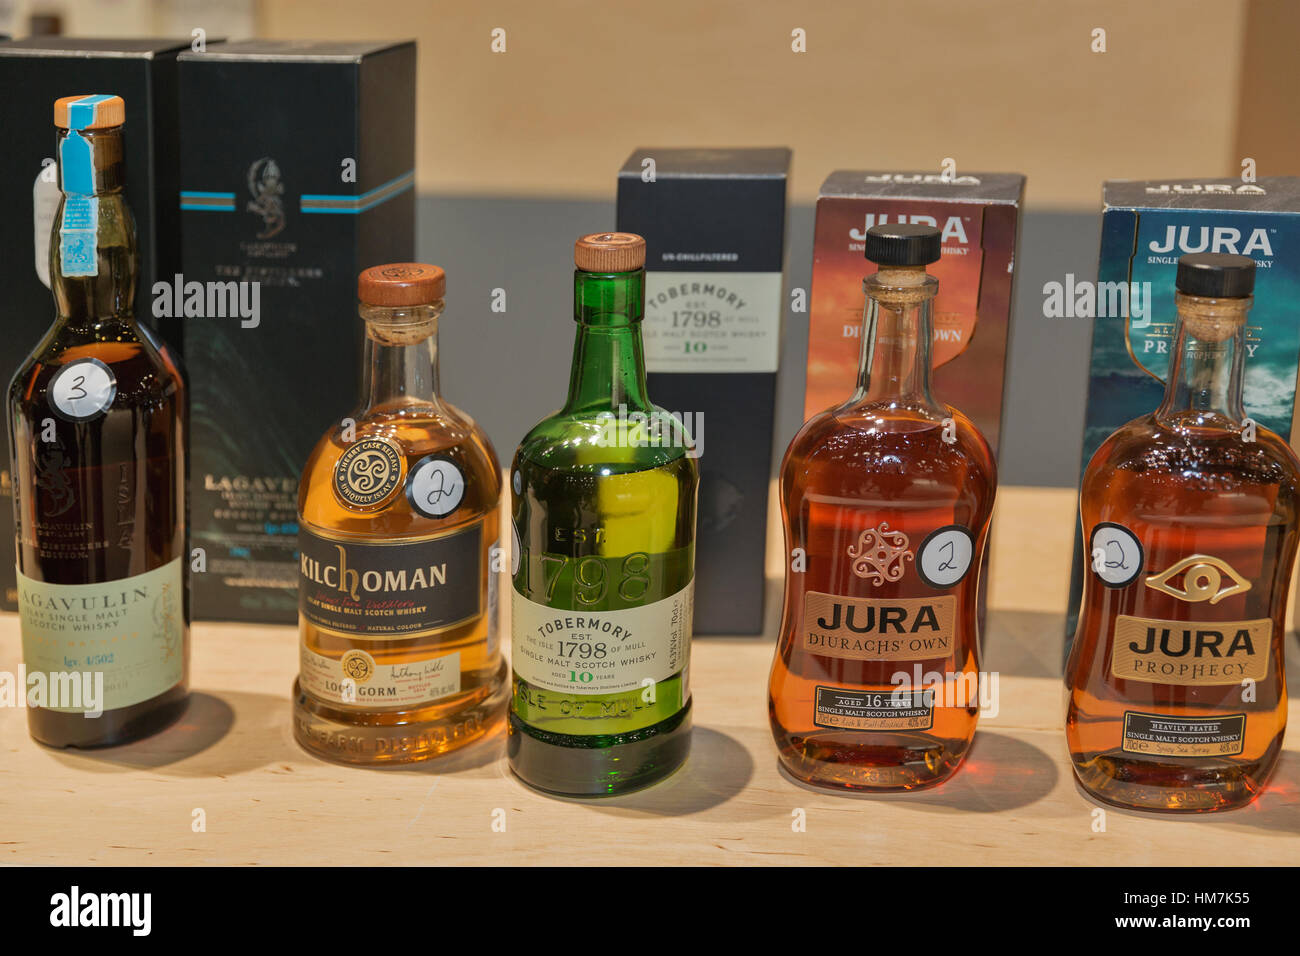 KIEV, UKRAINE - NOVEMBER 21, 2015: Different bottles of rare and exclusive Single Malt Scotch Whiskey on display for tasting at 1st Ukrainian Whisky D Stock Photo